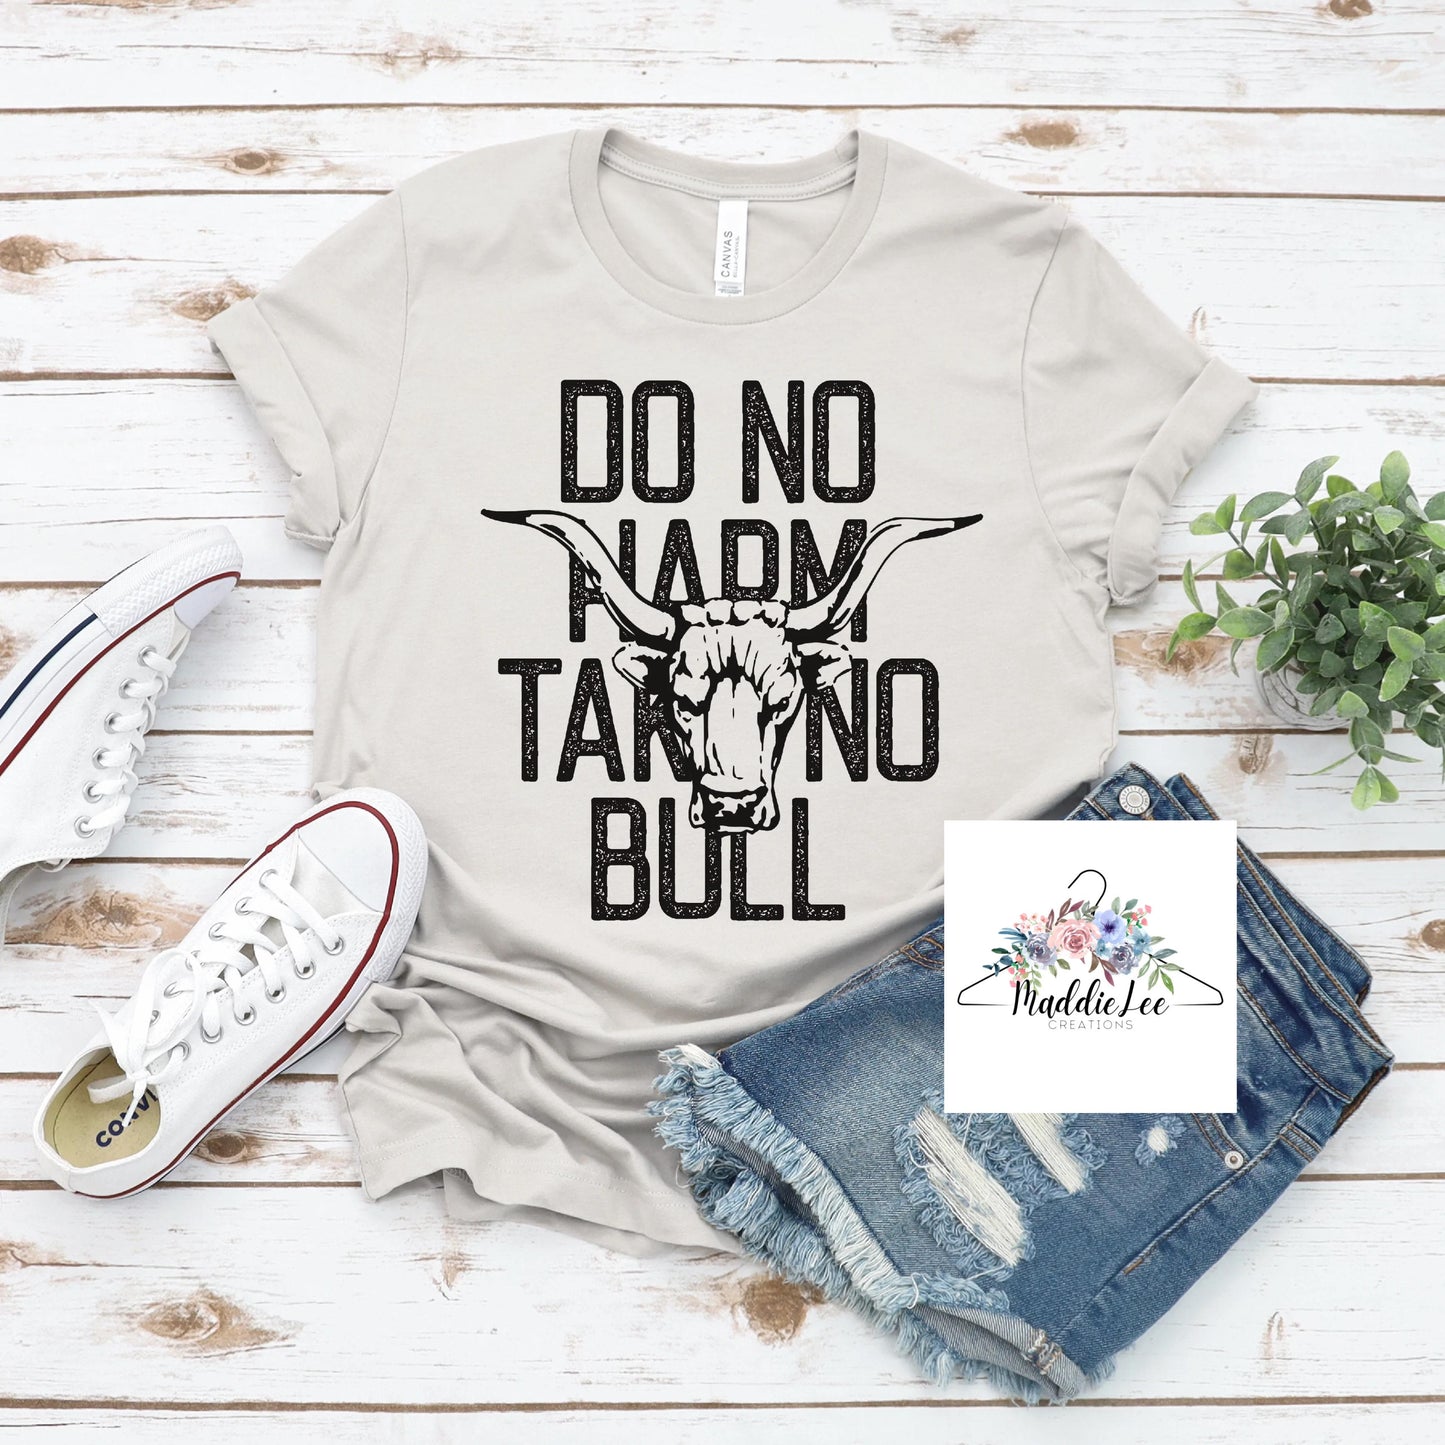 Do No Harm, Take No Bull Adult Tee